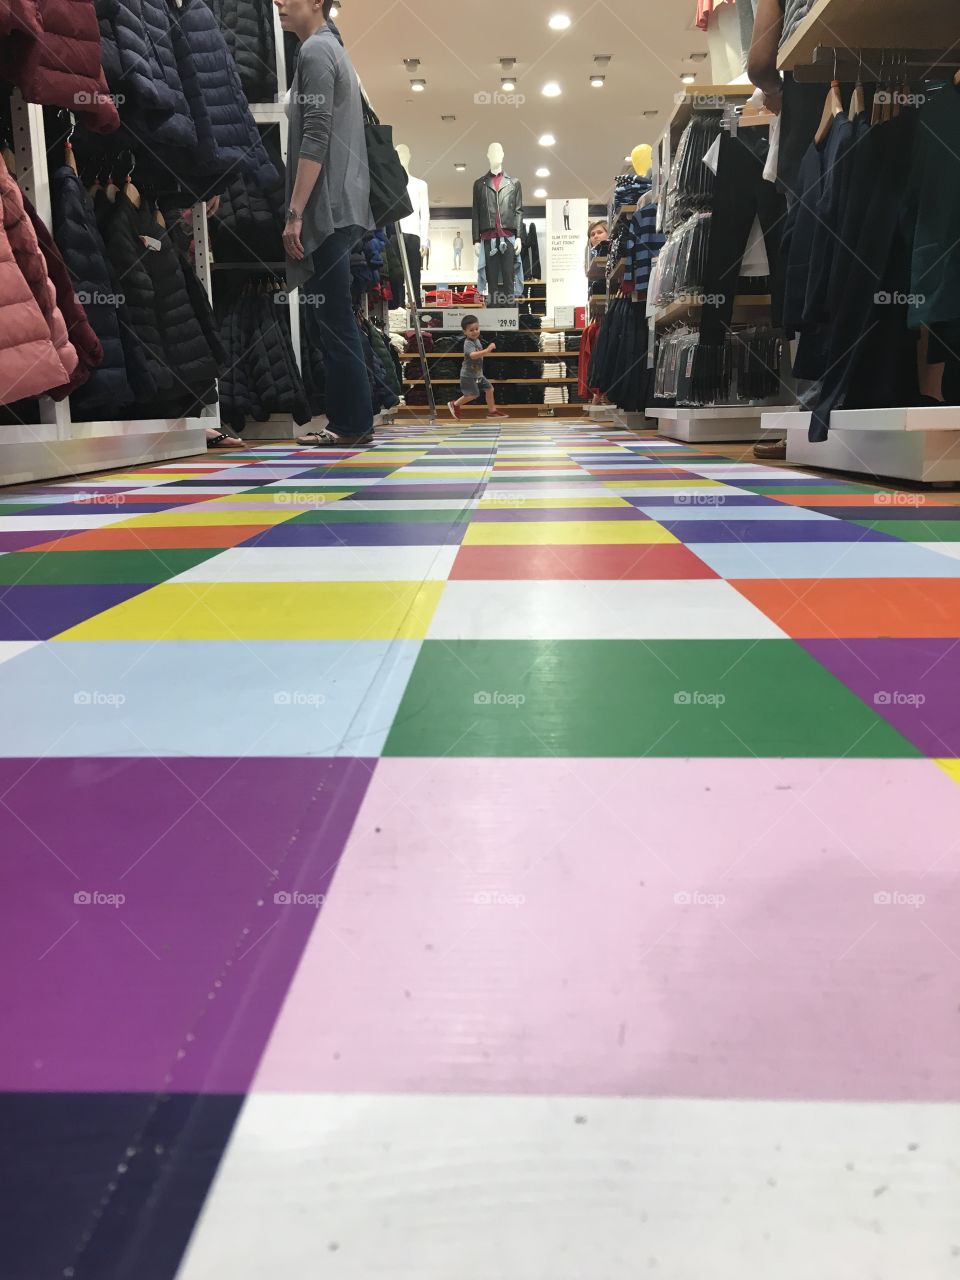 Mall floor